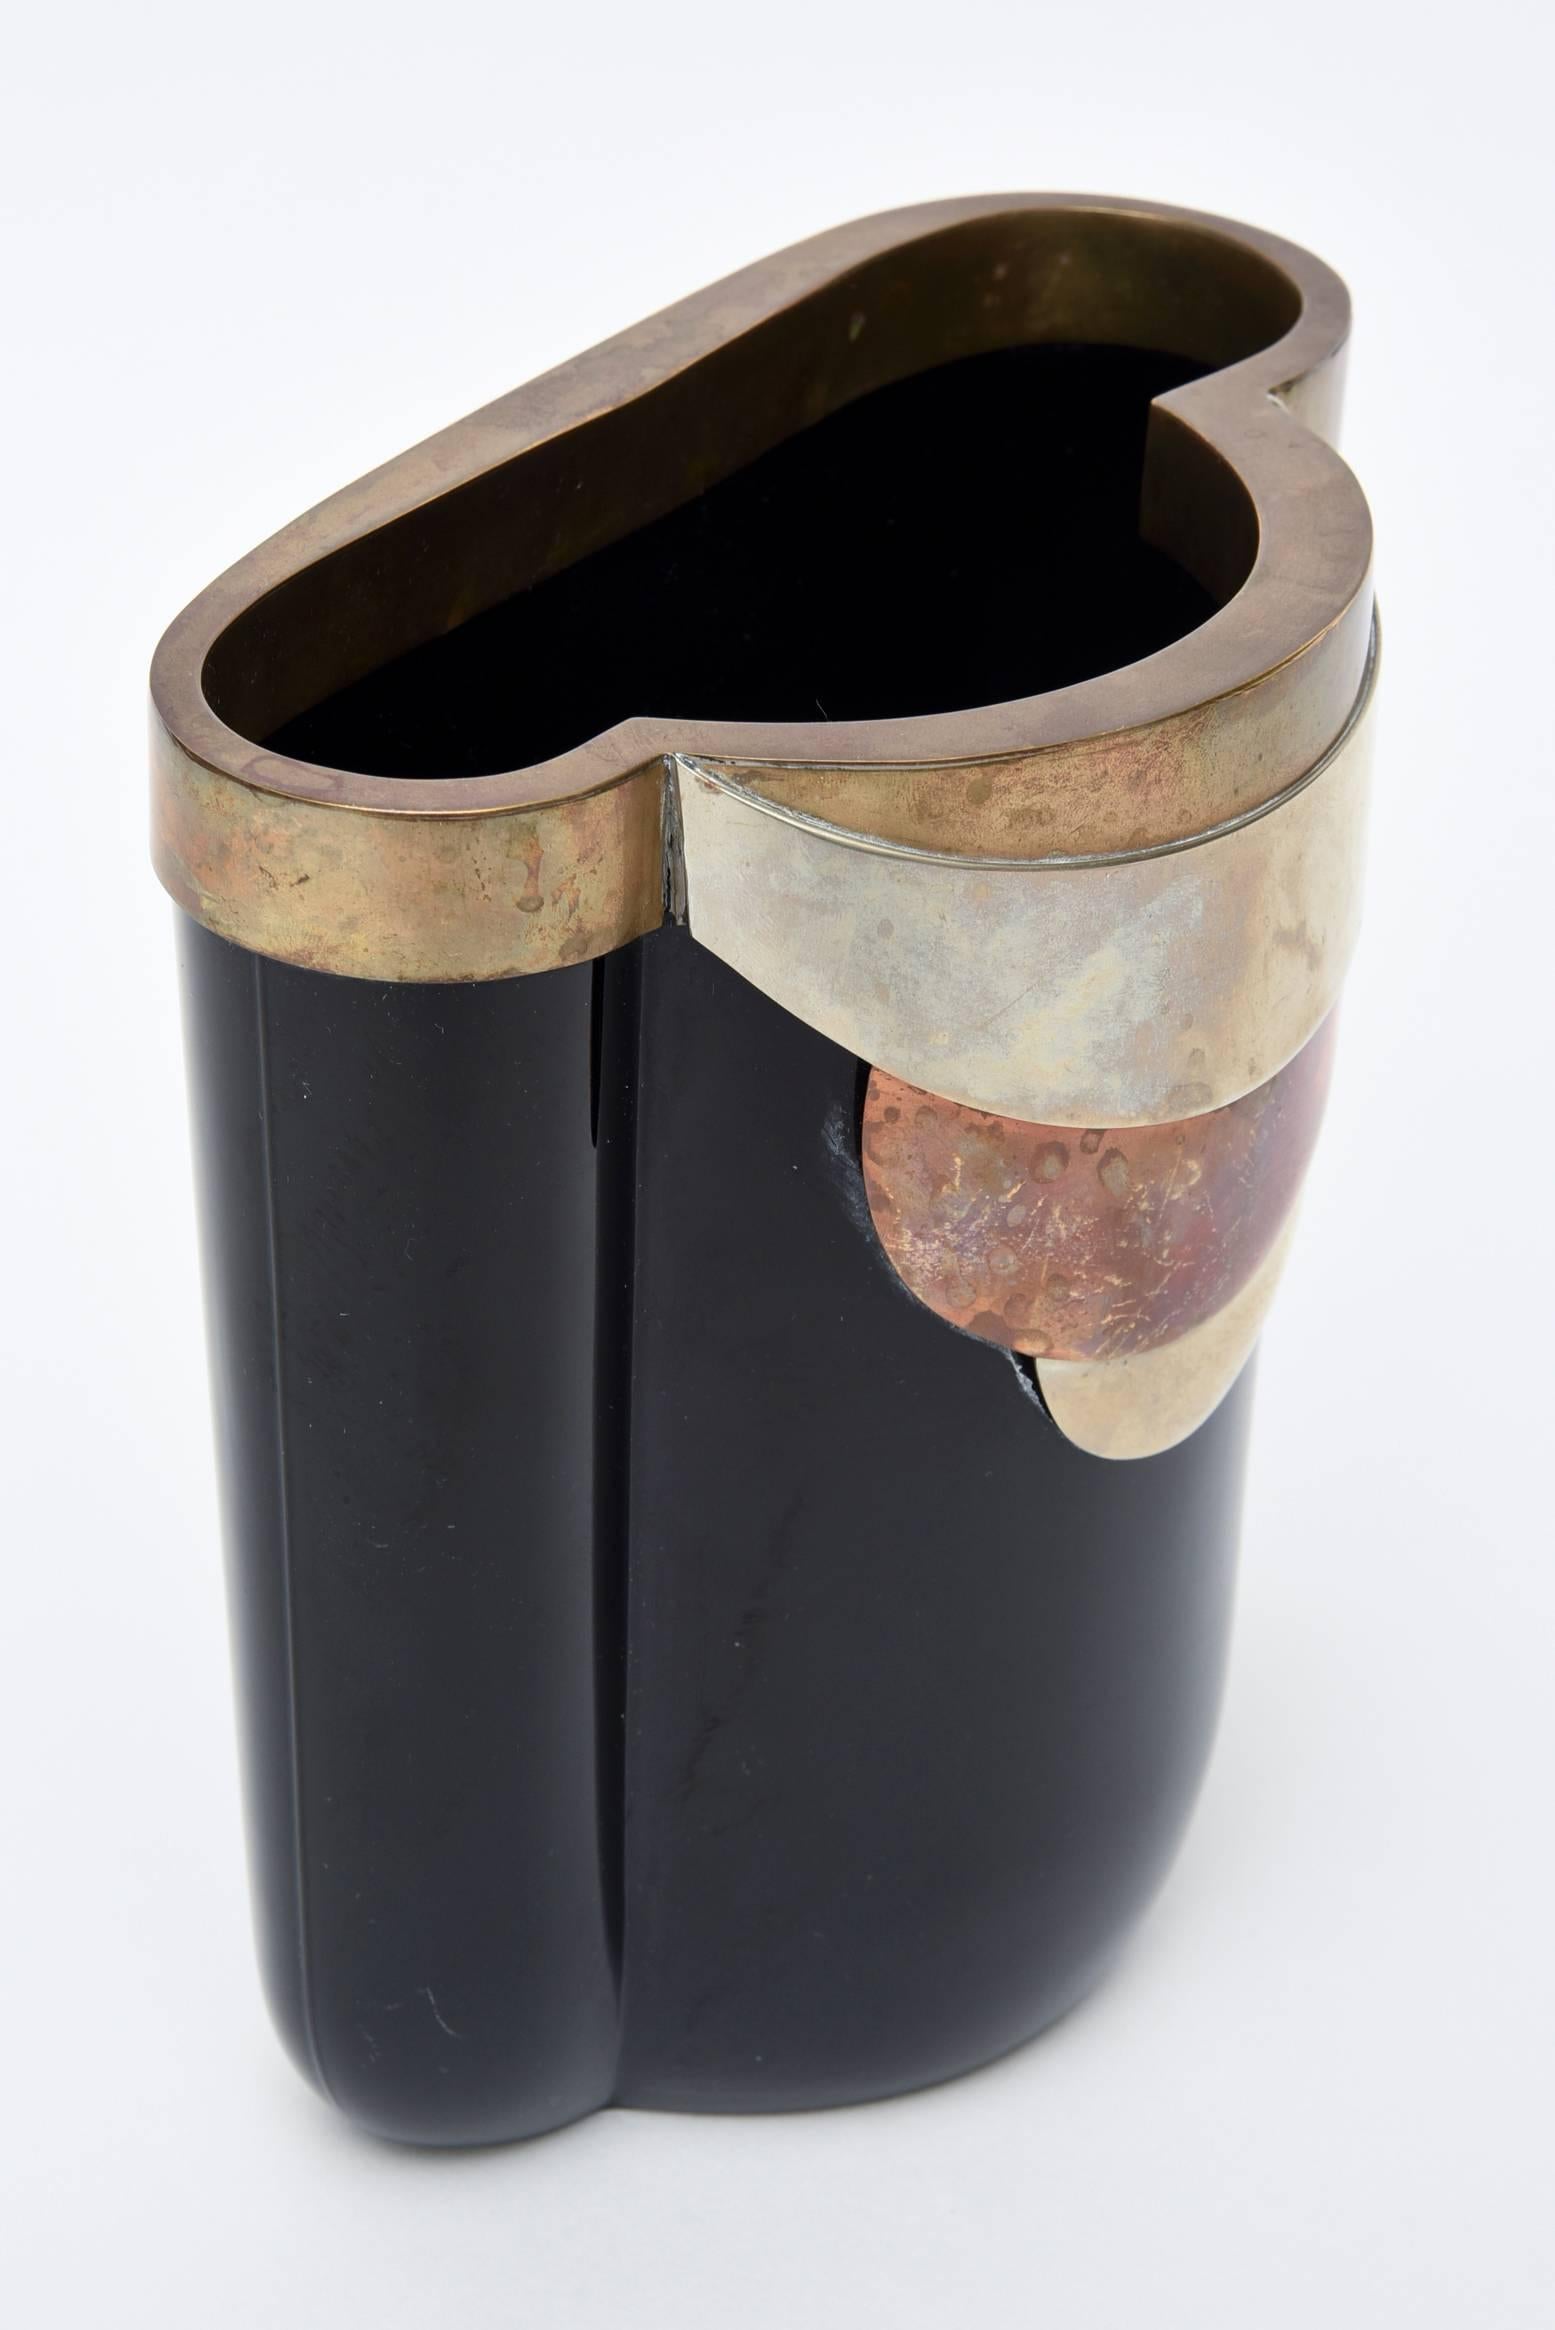 Antonio Pavia Murano Black Glass and Mixed Metals Sculptural Vase Vessel Italian 1